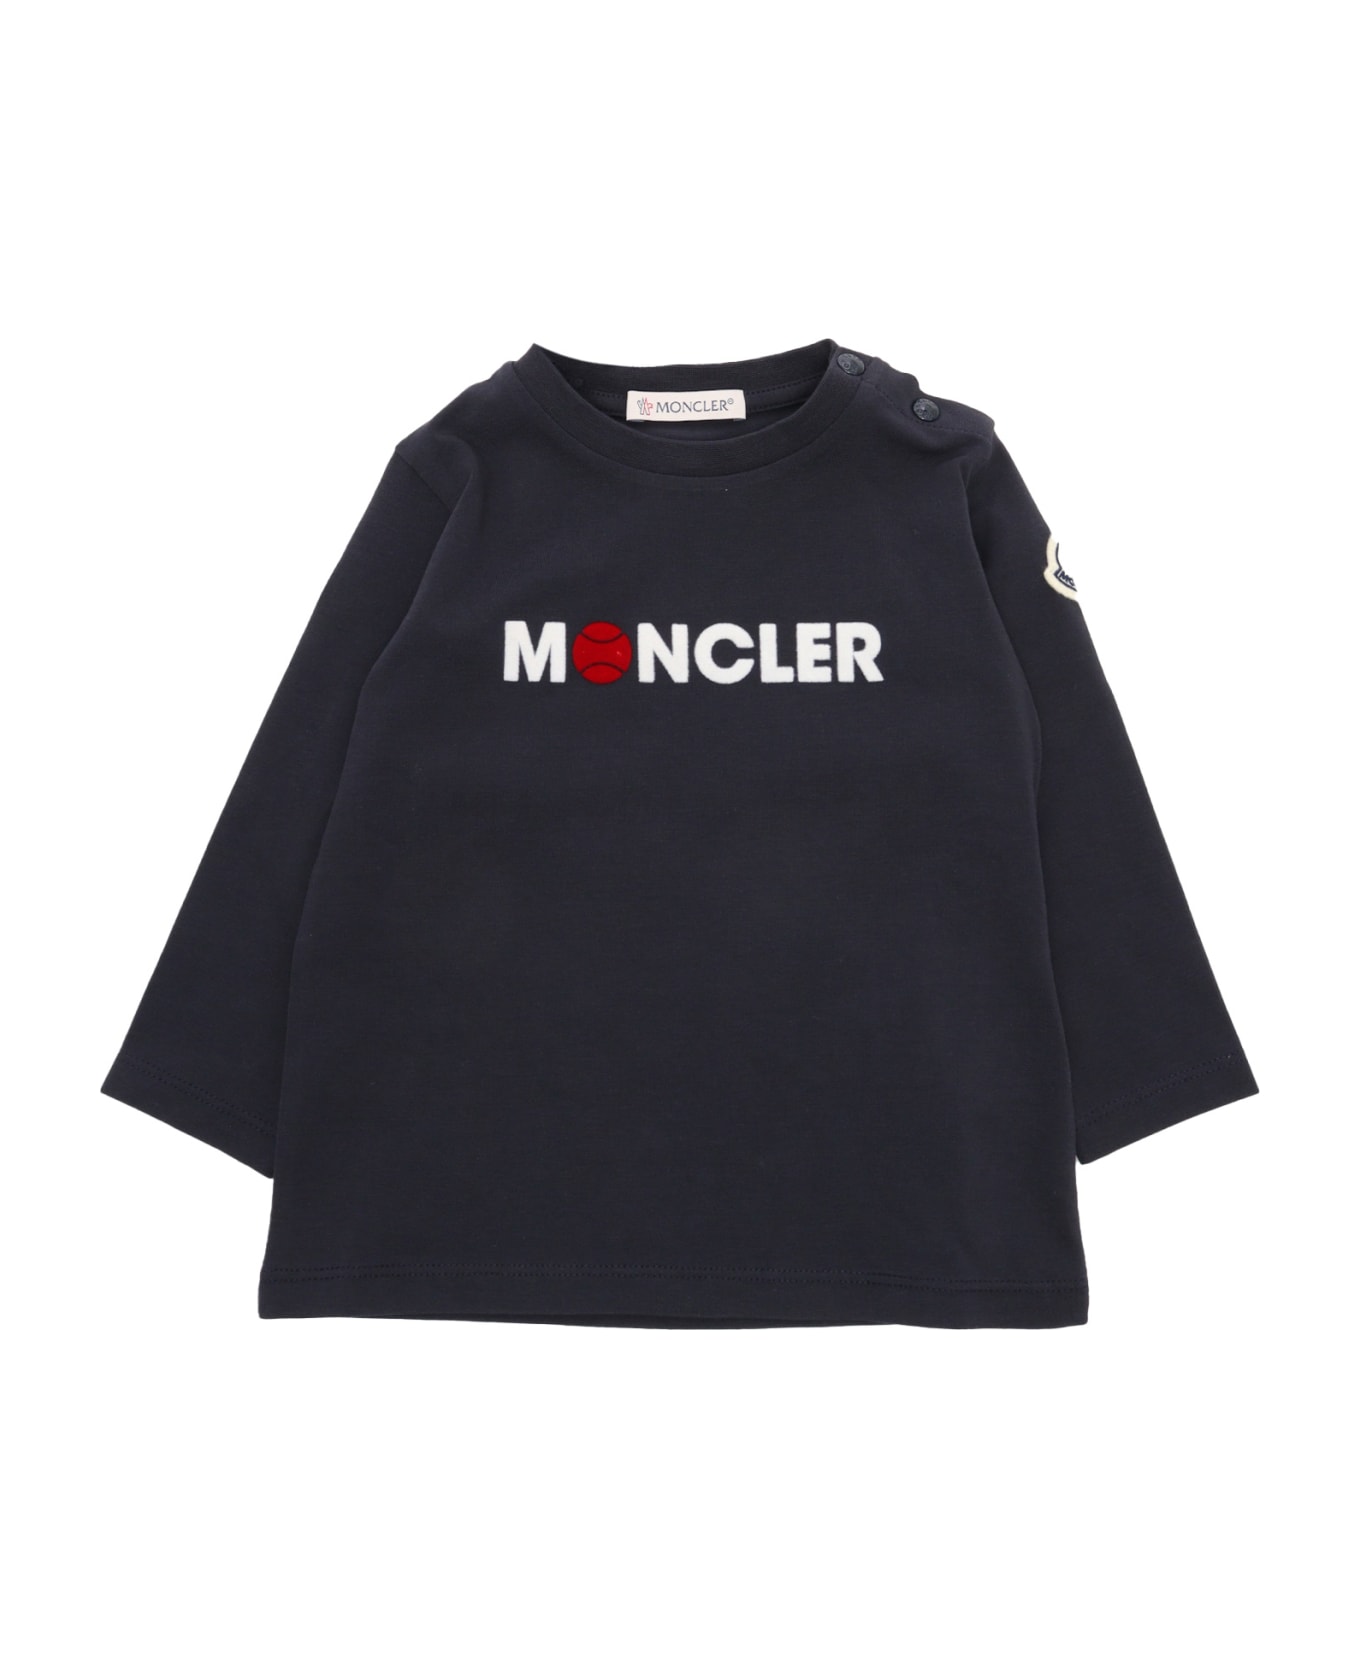 Moncler Sweatshirt For Children - BLUE